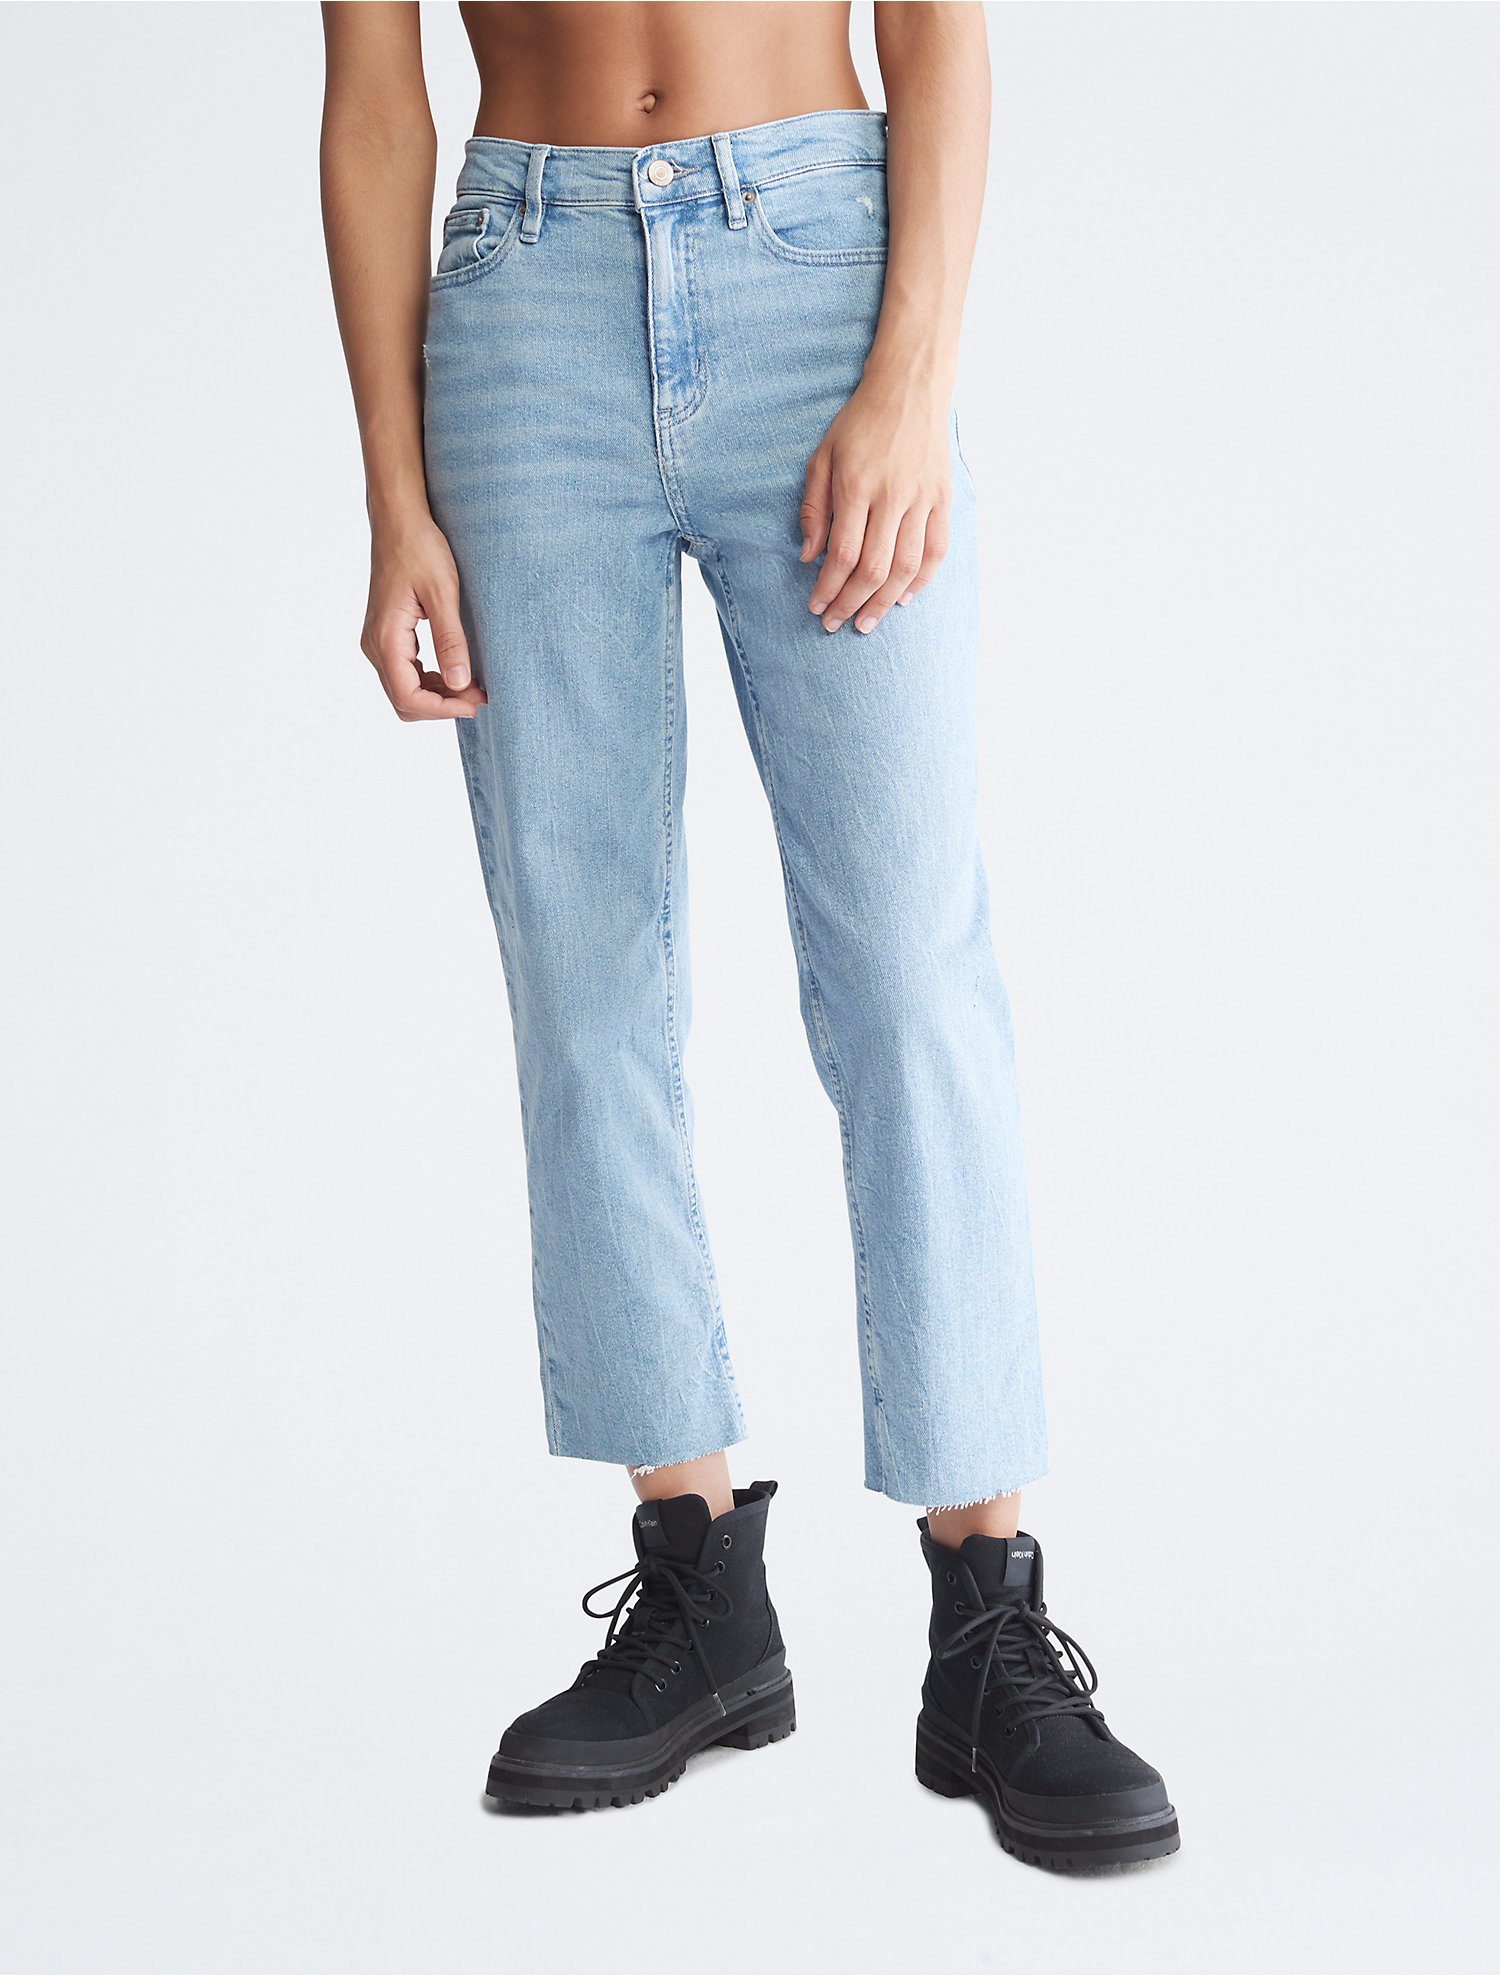 Descubrir 37+ imagen calvin klein jeans vintage